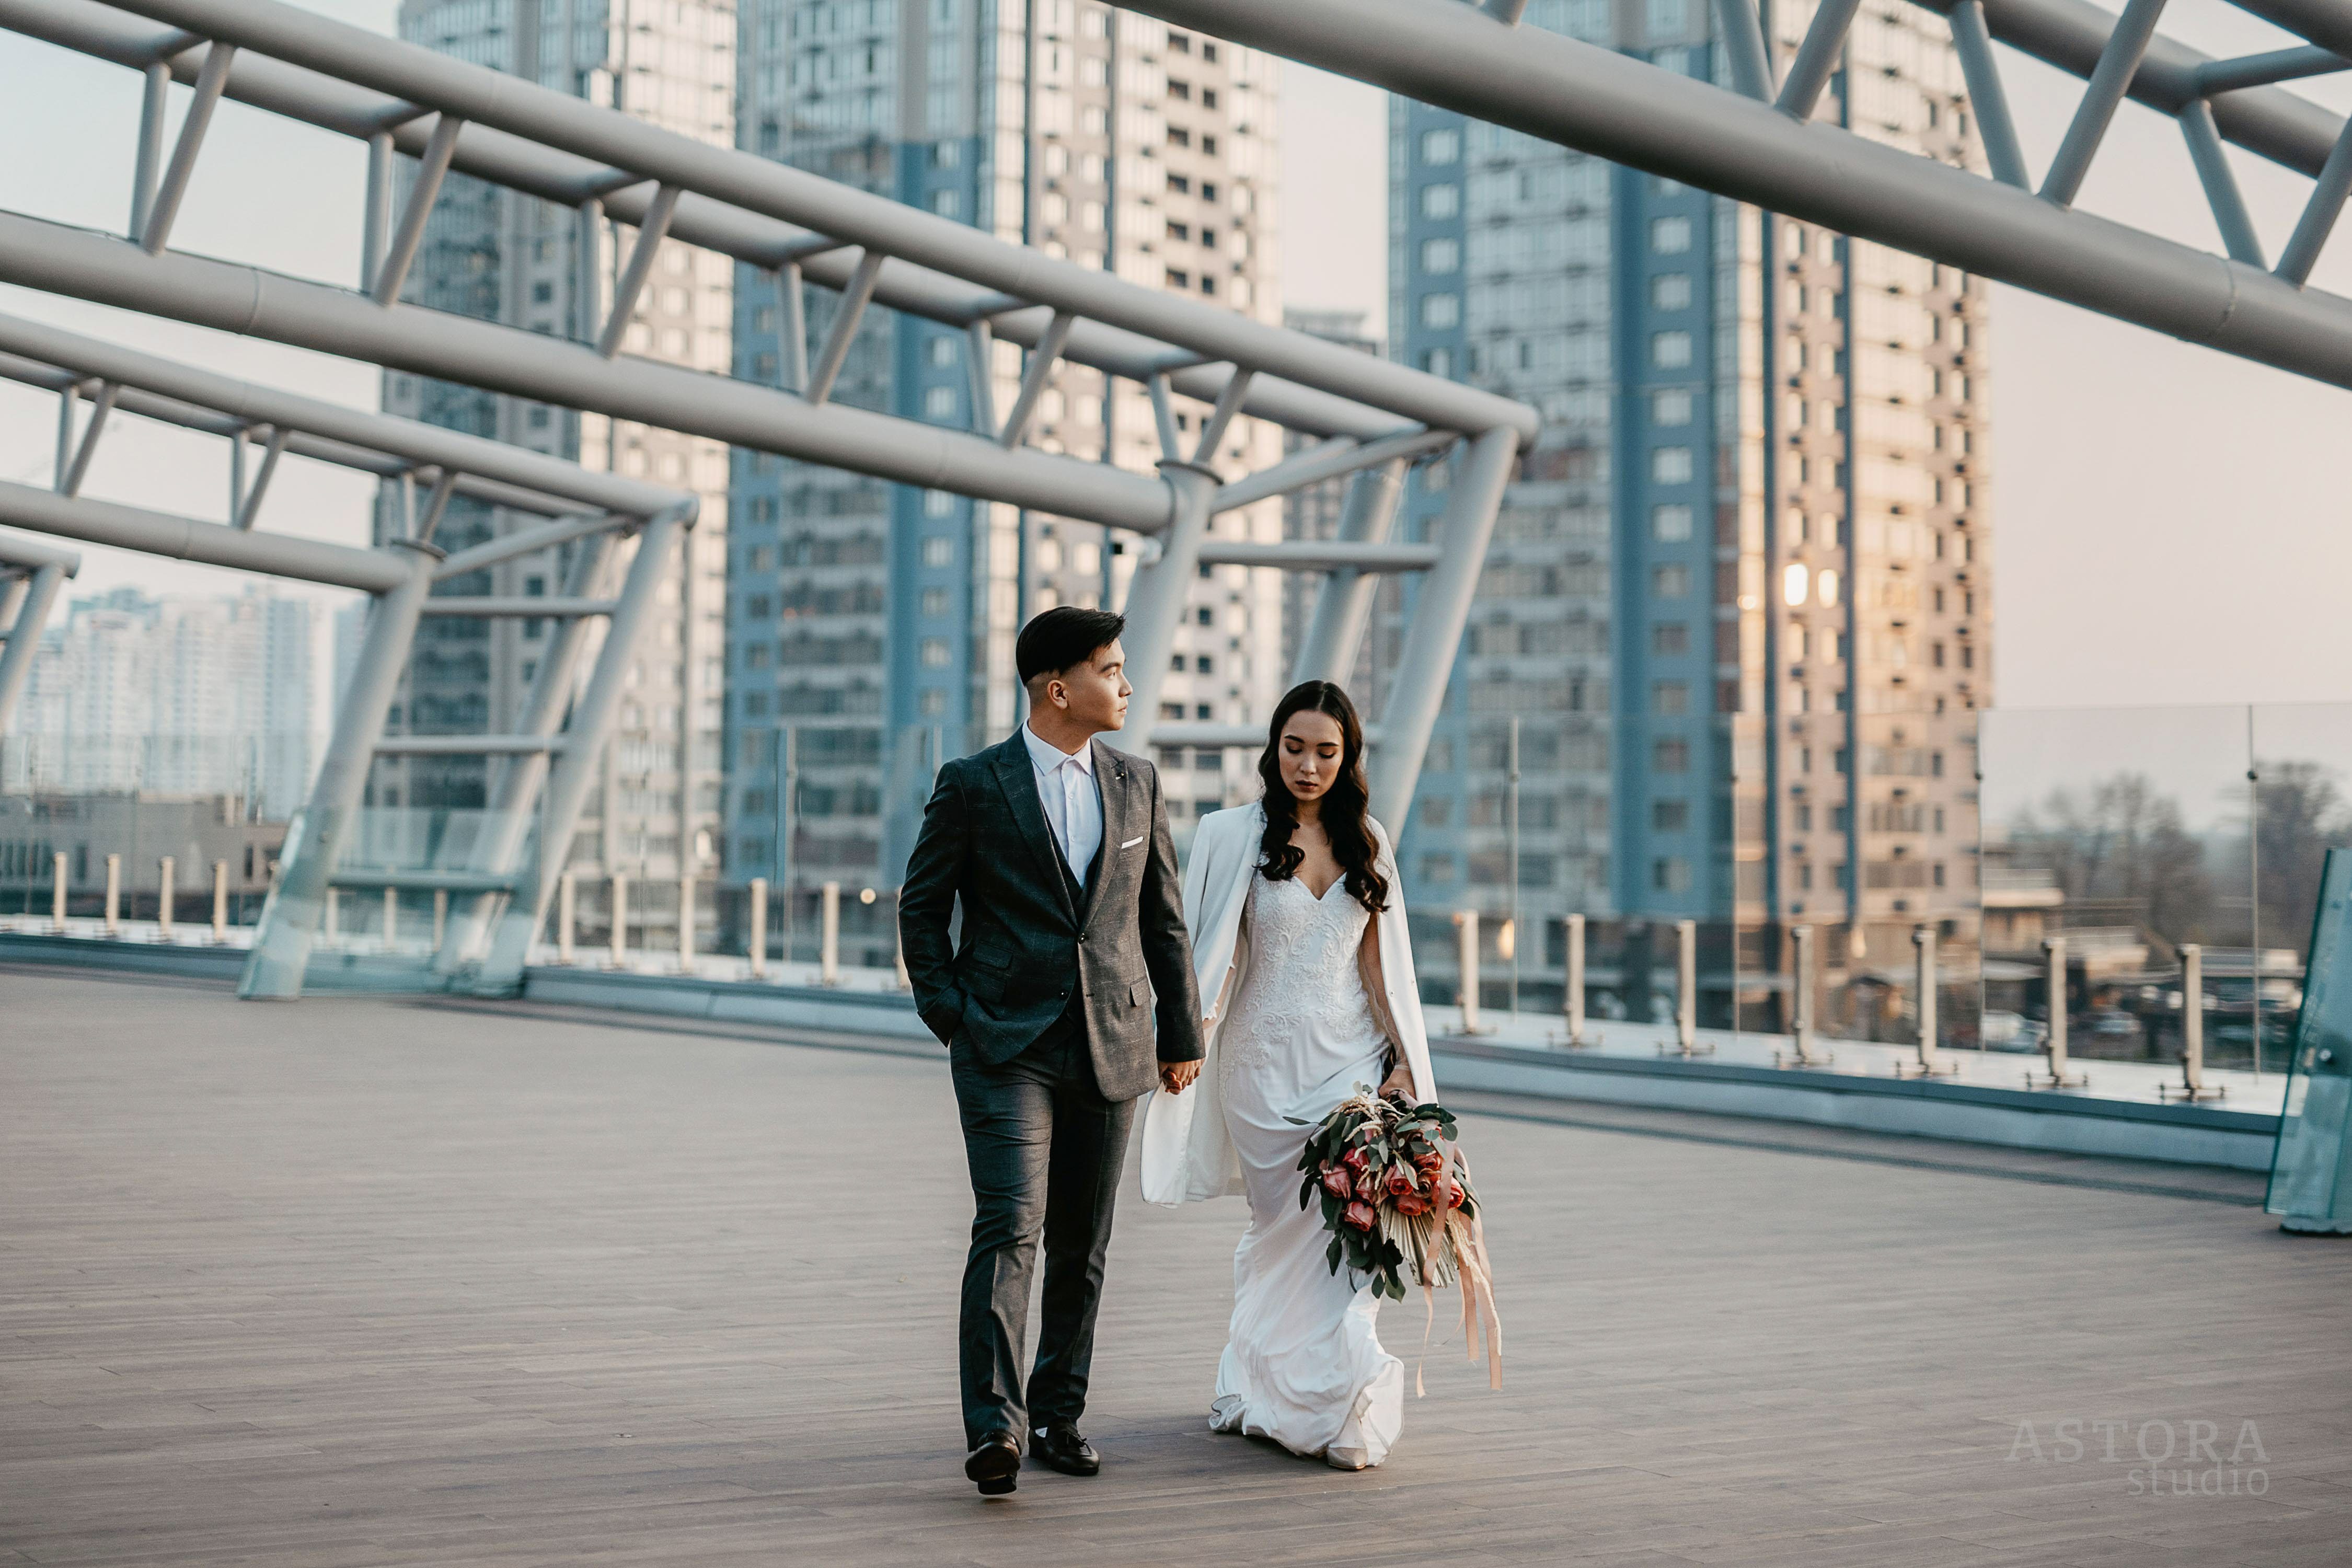 Korean Wedding Photography In Toronto For Max And Simona